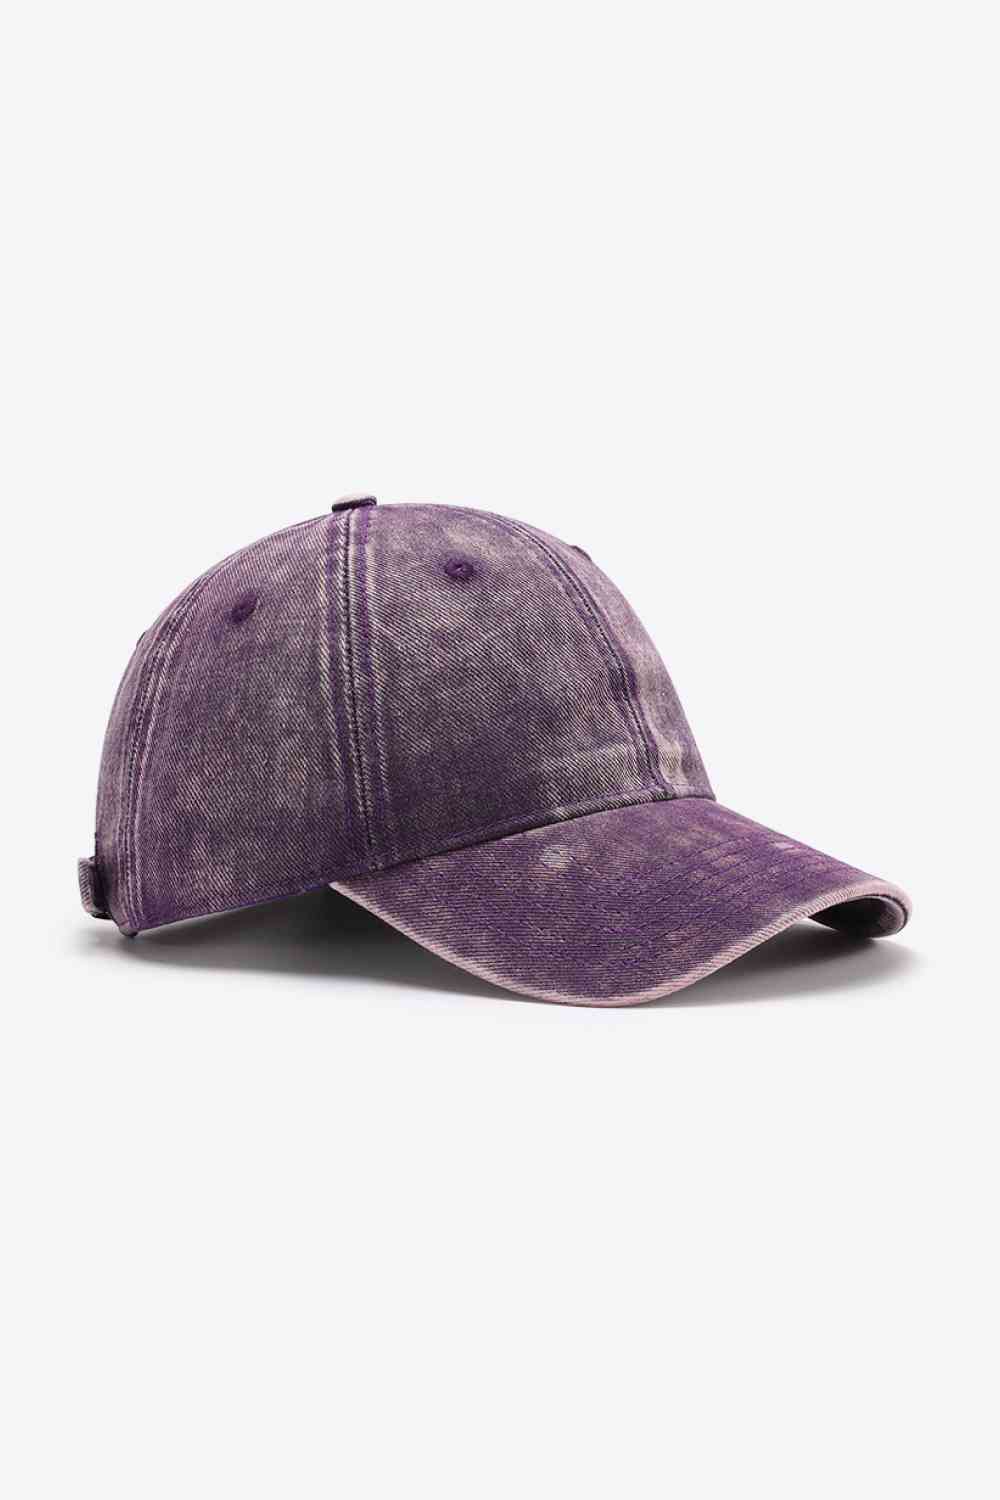 TEEK - Plain Adjustable Baseball Cap HAT TEEK Trend Purple One Size 